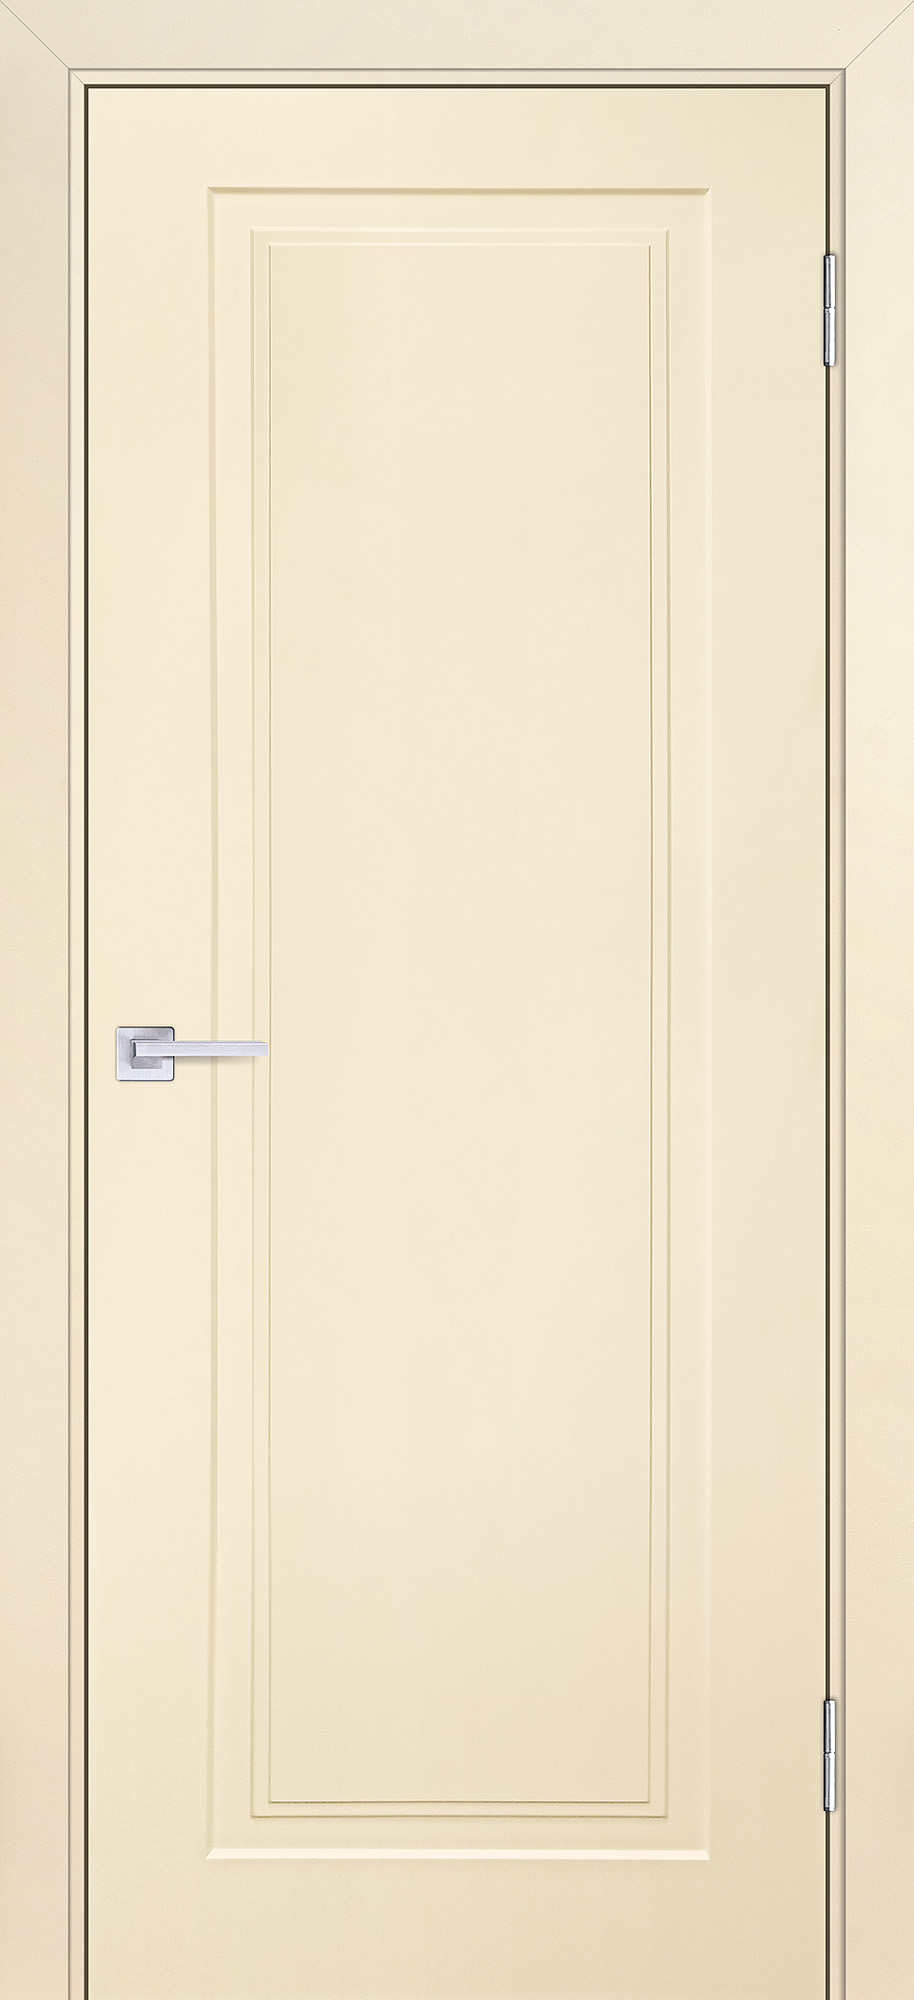 Двери крашеные (Эмаль) ТЕКОНА Смальта-Лайн 06 глухое Айвори ral 1013 размер 200 х 80 см. артикул F0000093274